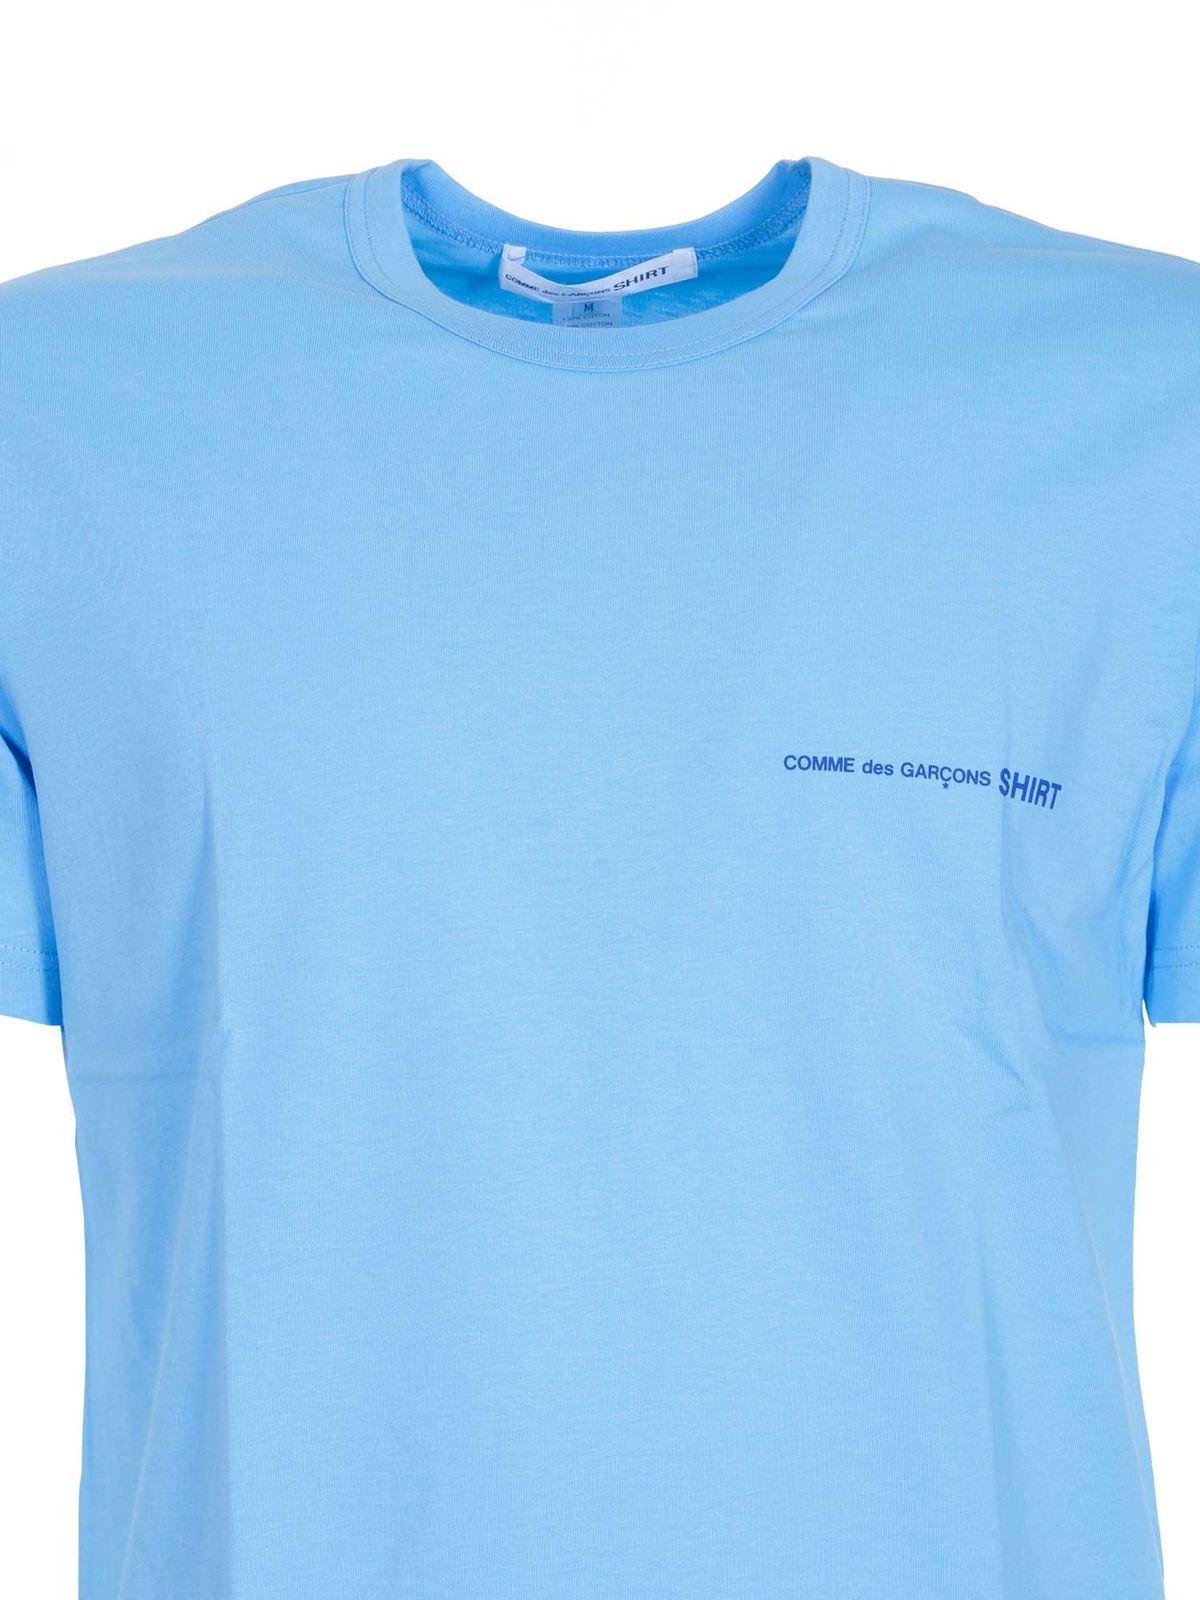 Camisetas Comme Des Garcons Shirt - Camiseta - Azul Claro - FGT0202